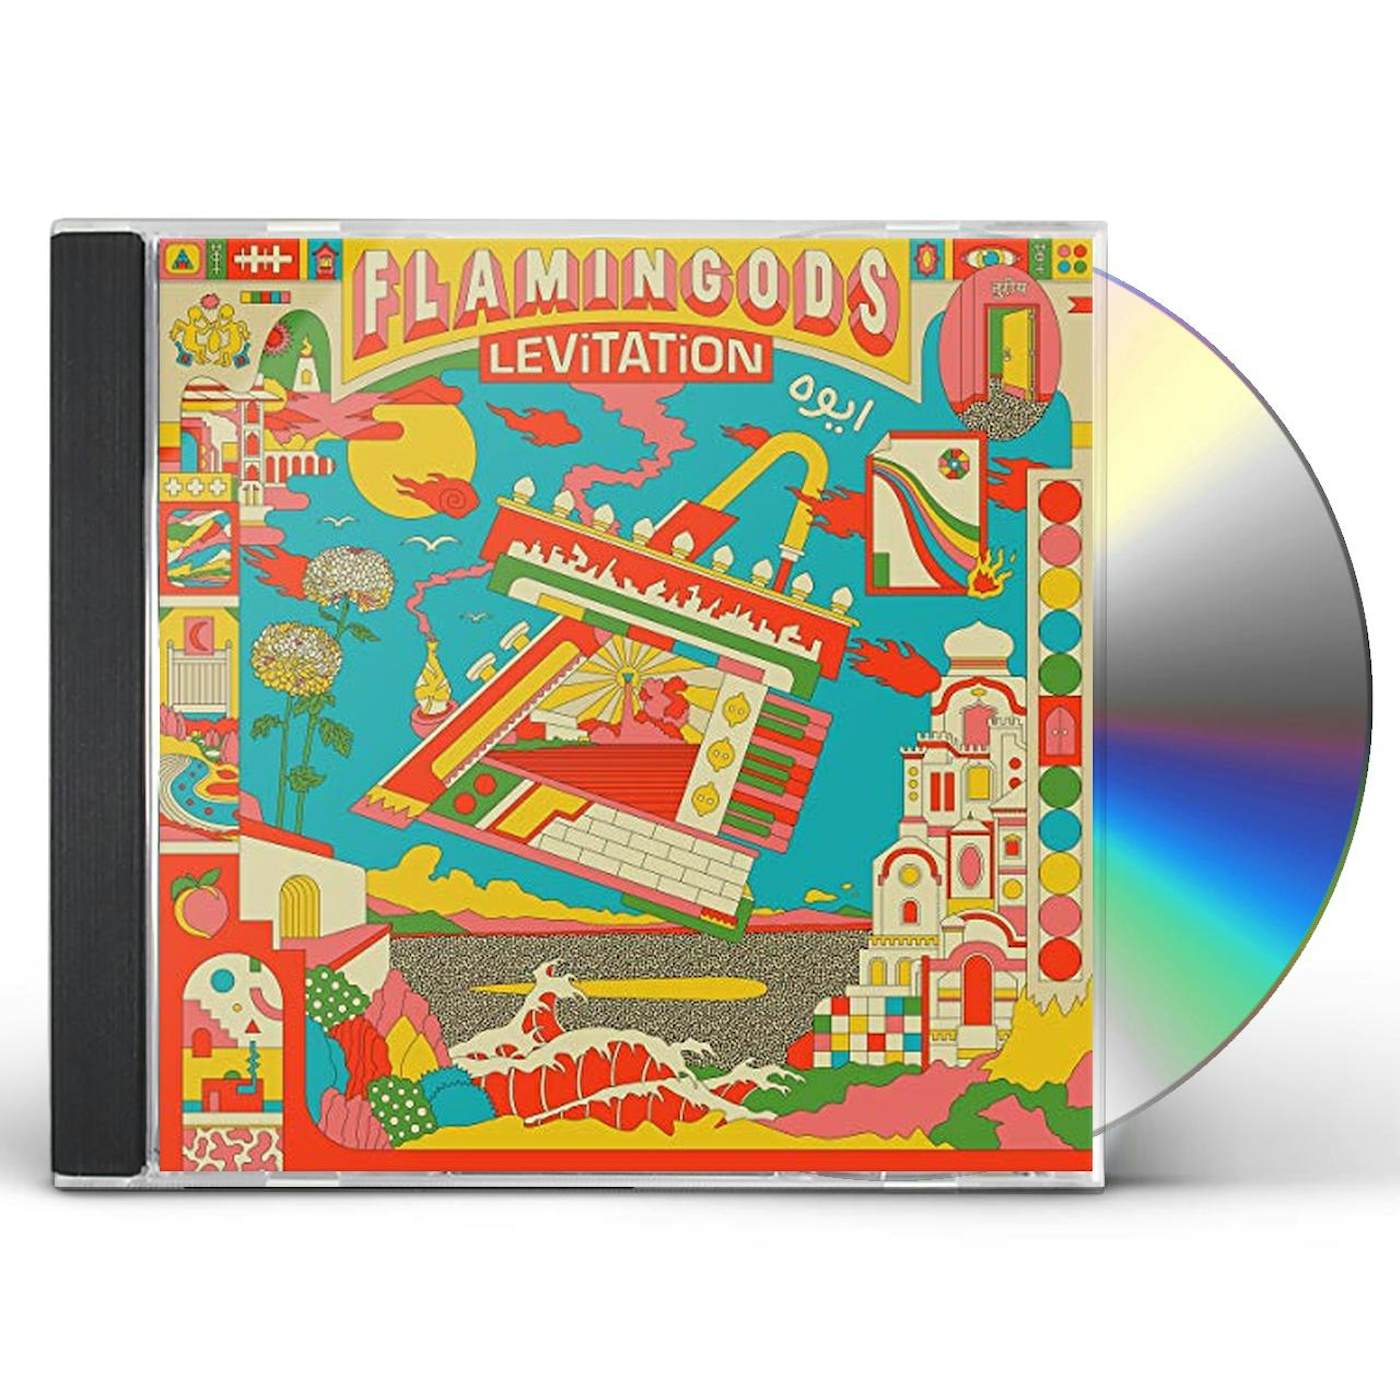 Flamingods LEVITATION CD